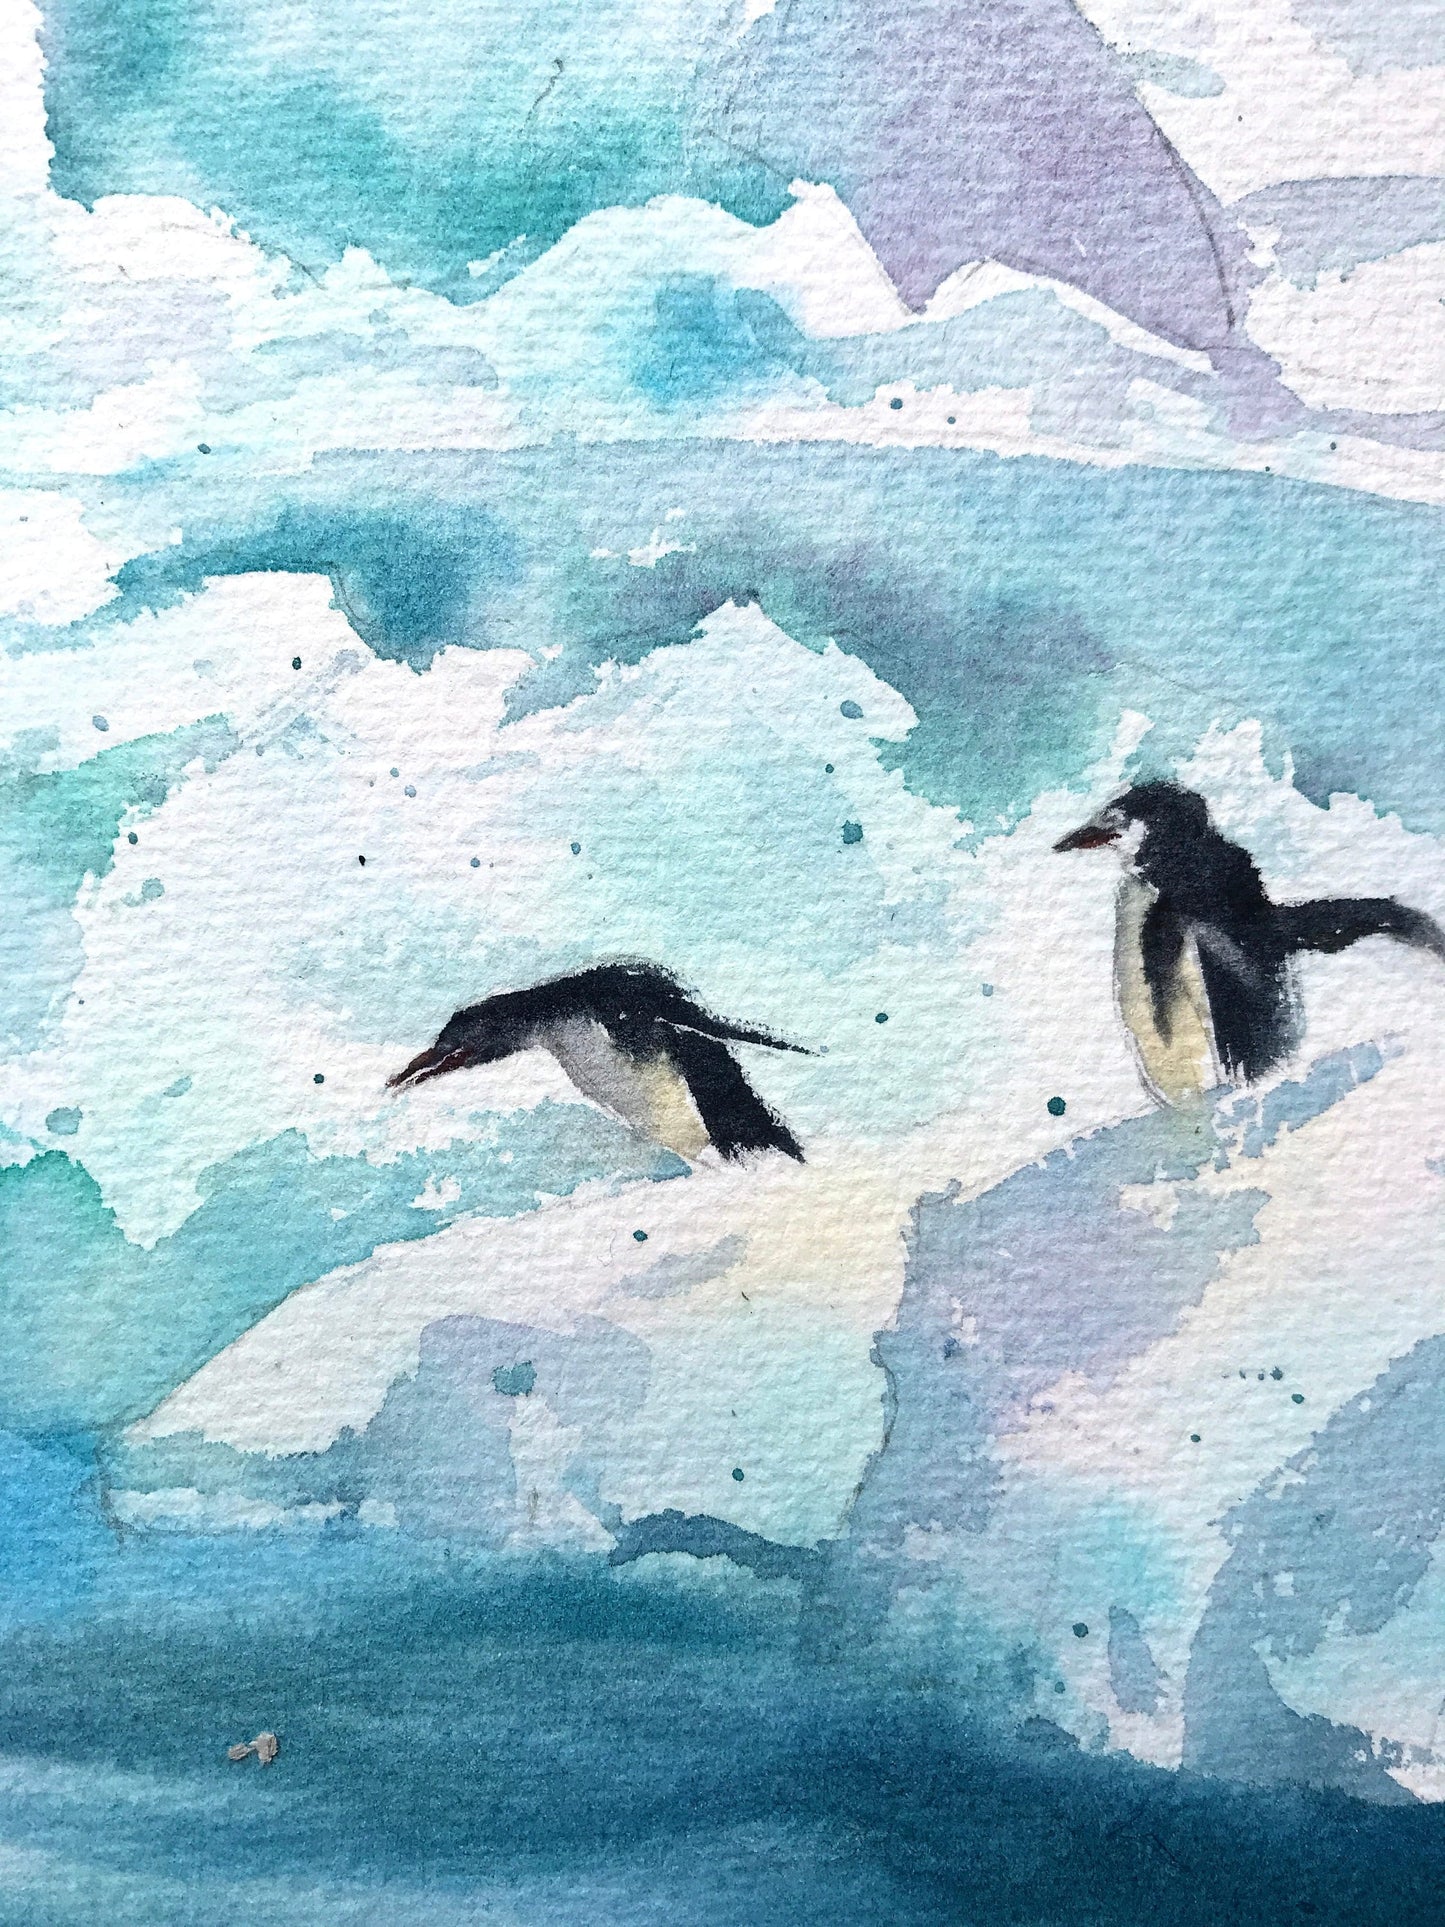 Antarctica Penguins Watercolor, Ice Painting Original, Iceberg Seascape, Explorer, Travel Adventure Art